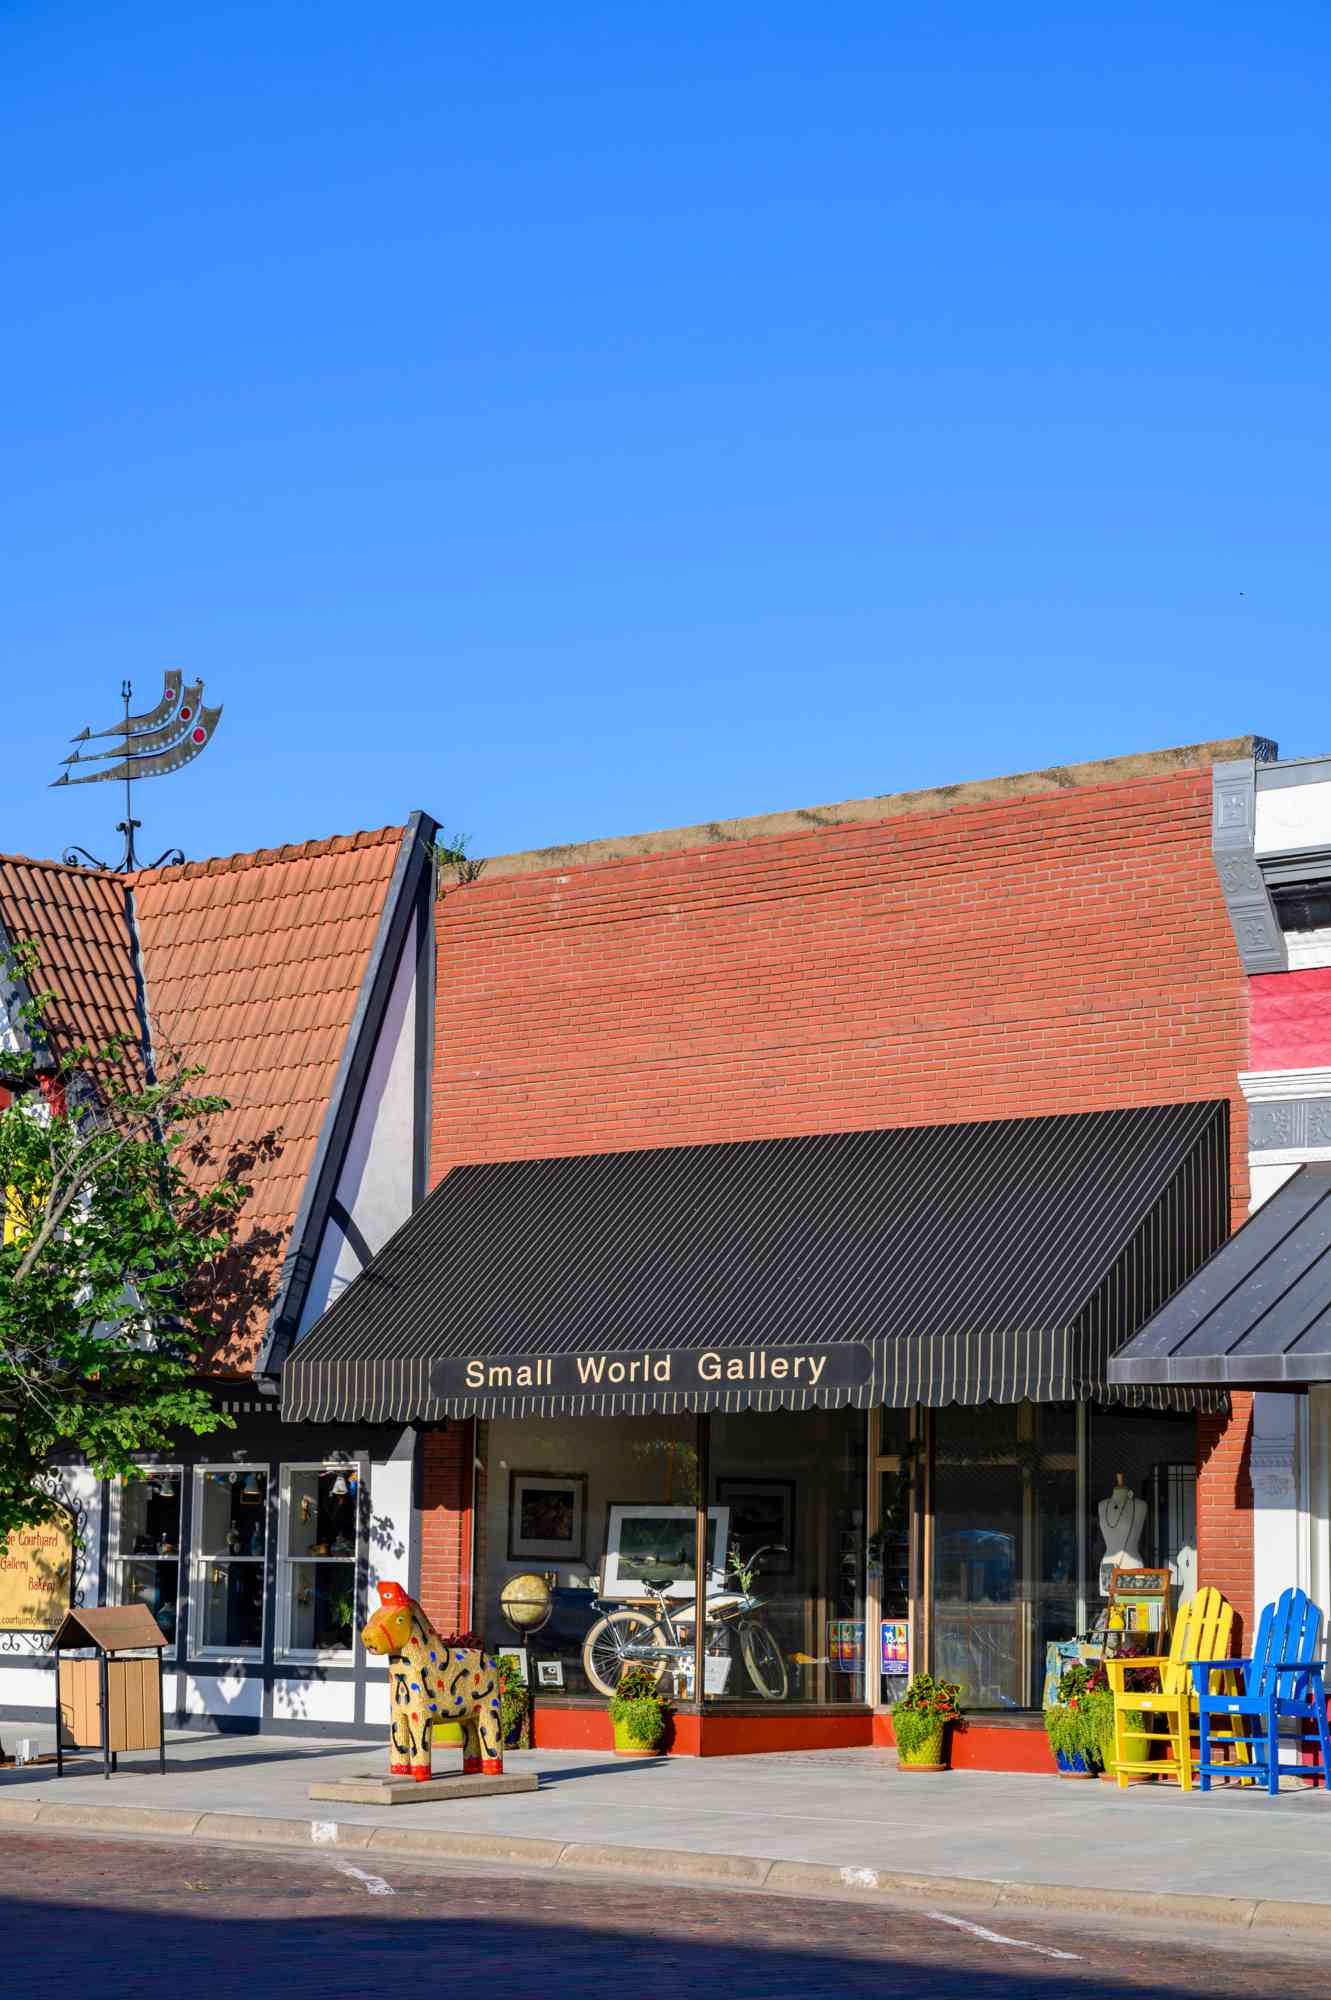 Small World Gallery, Lindsborg, Kansas